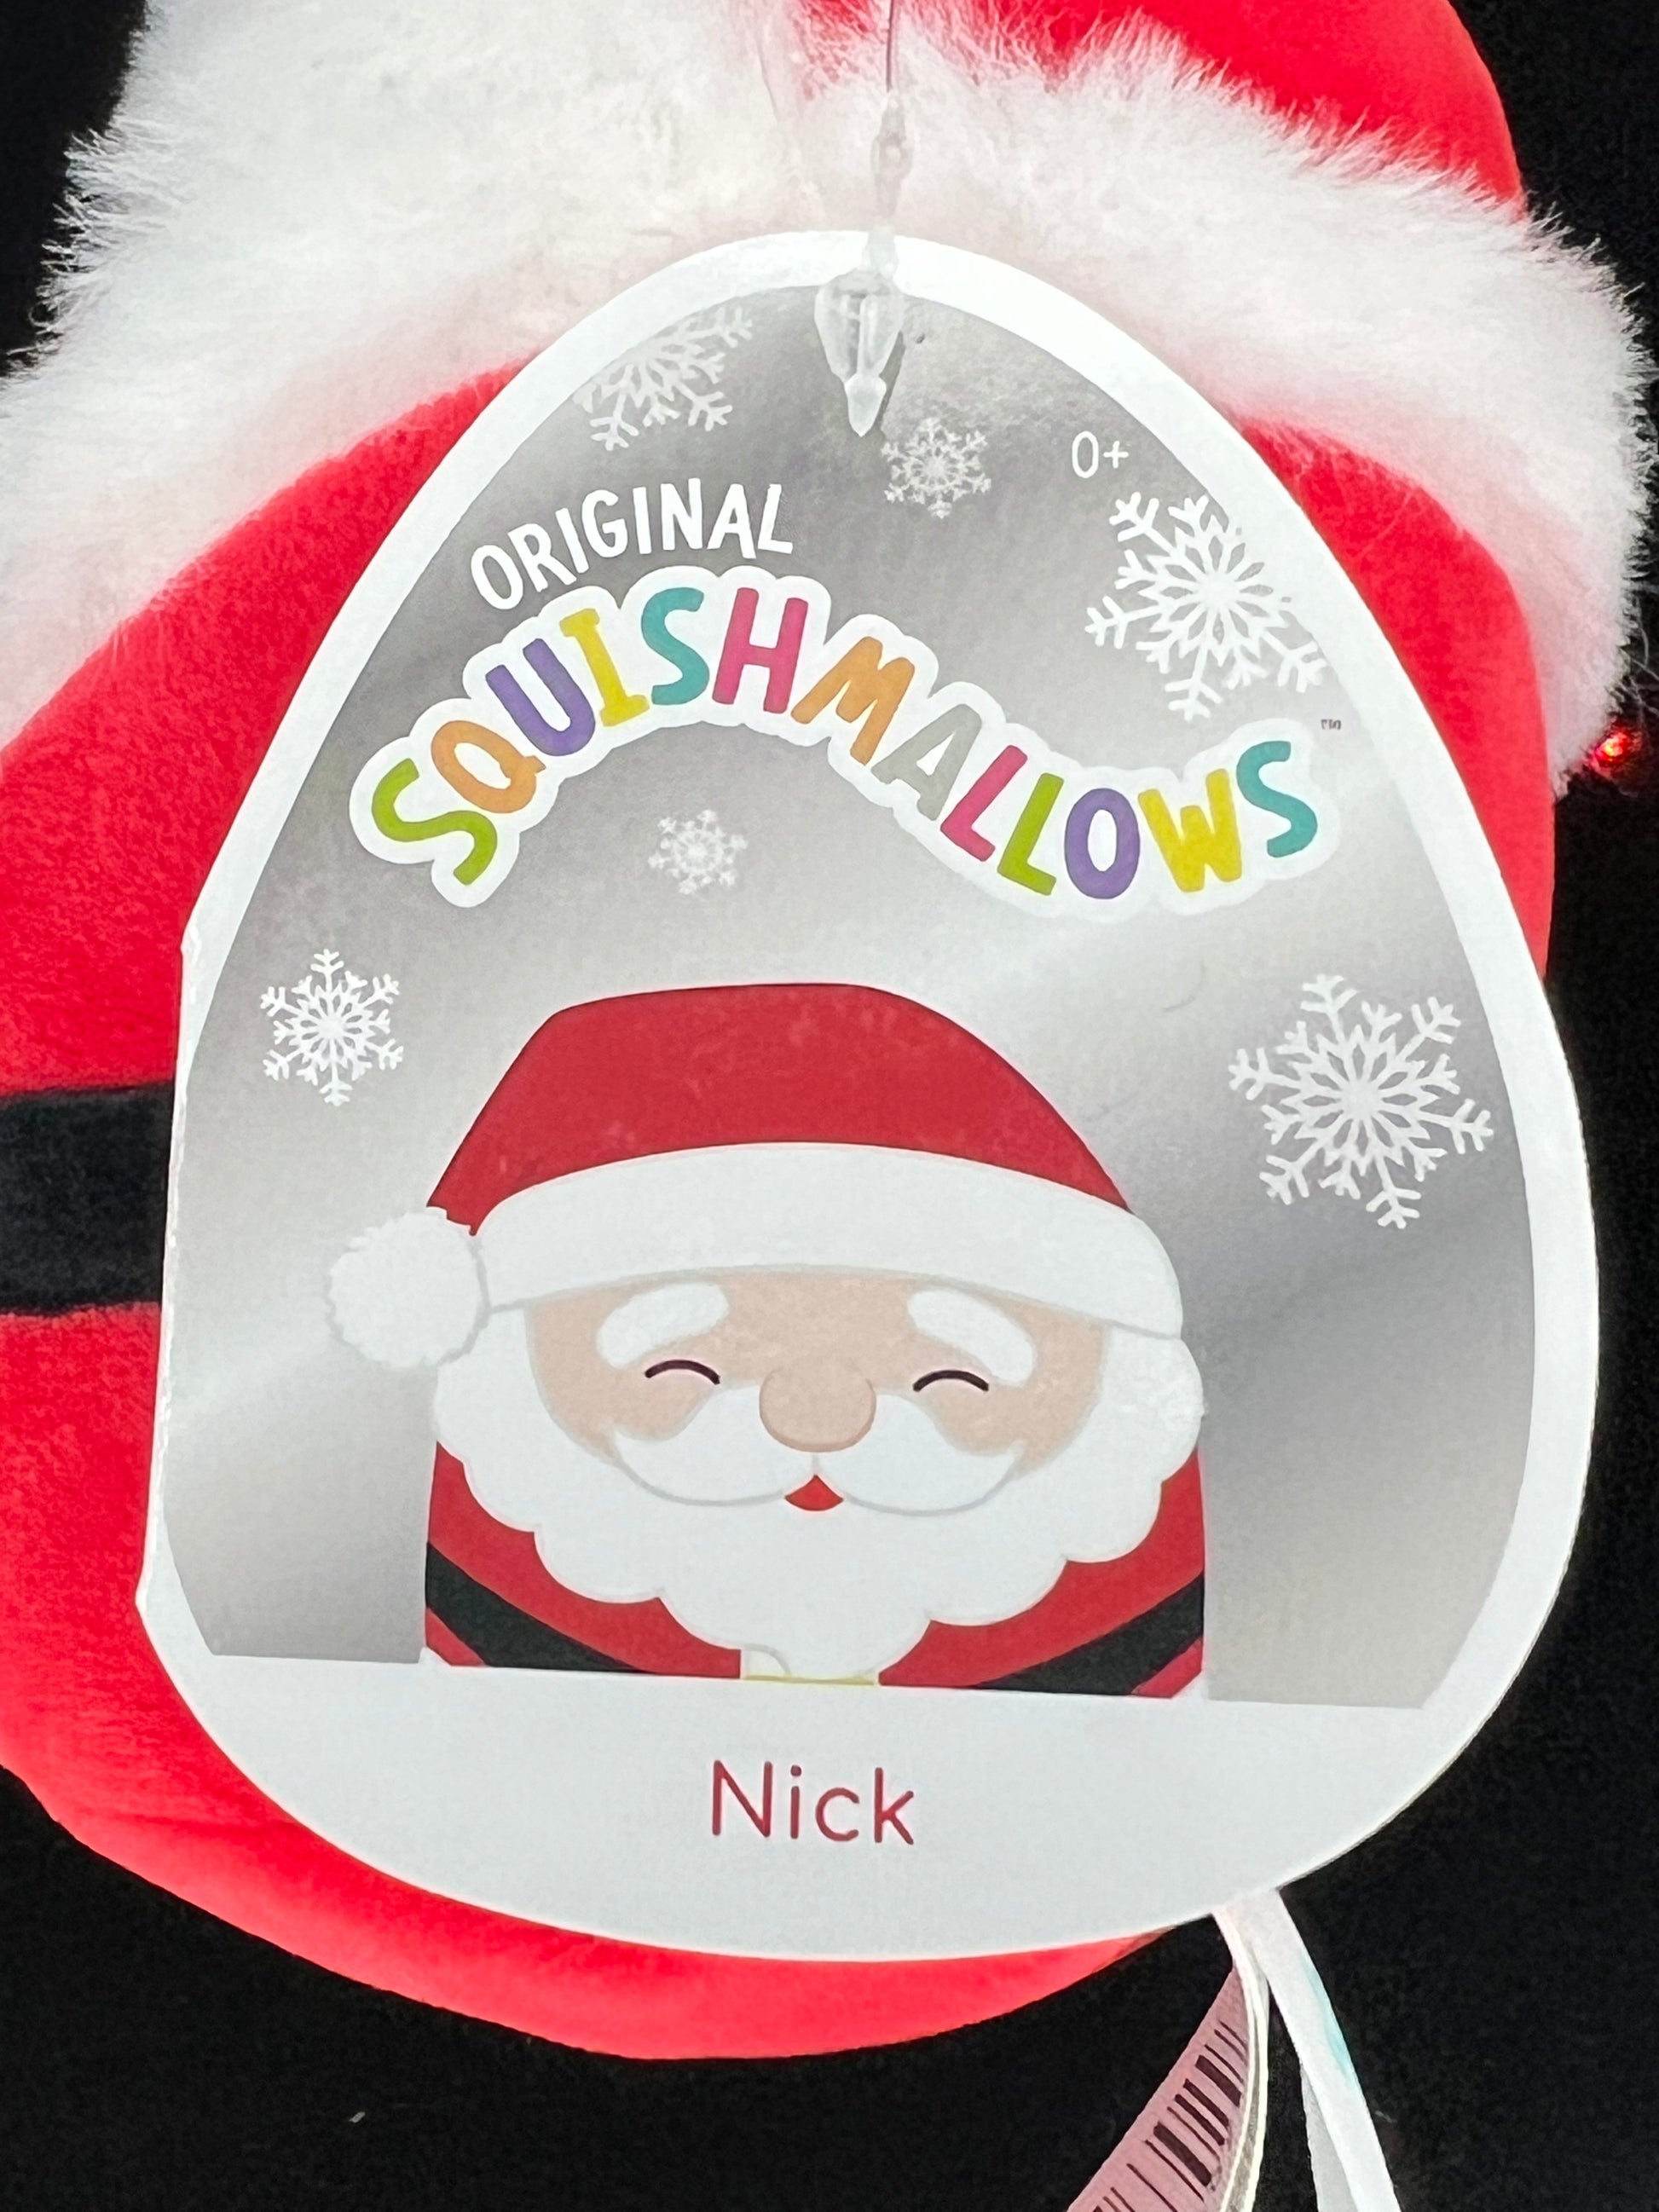 Squishmallow 5” Nick the Santa Claus.